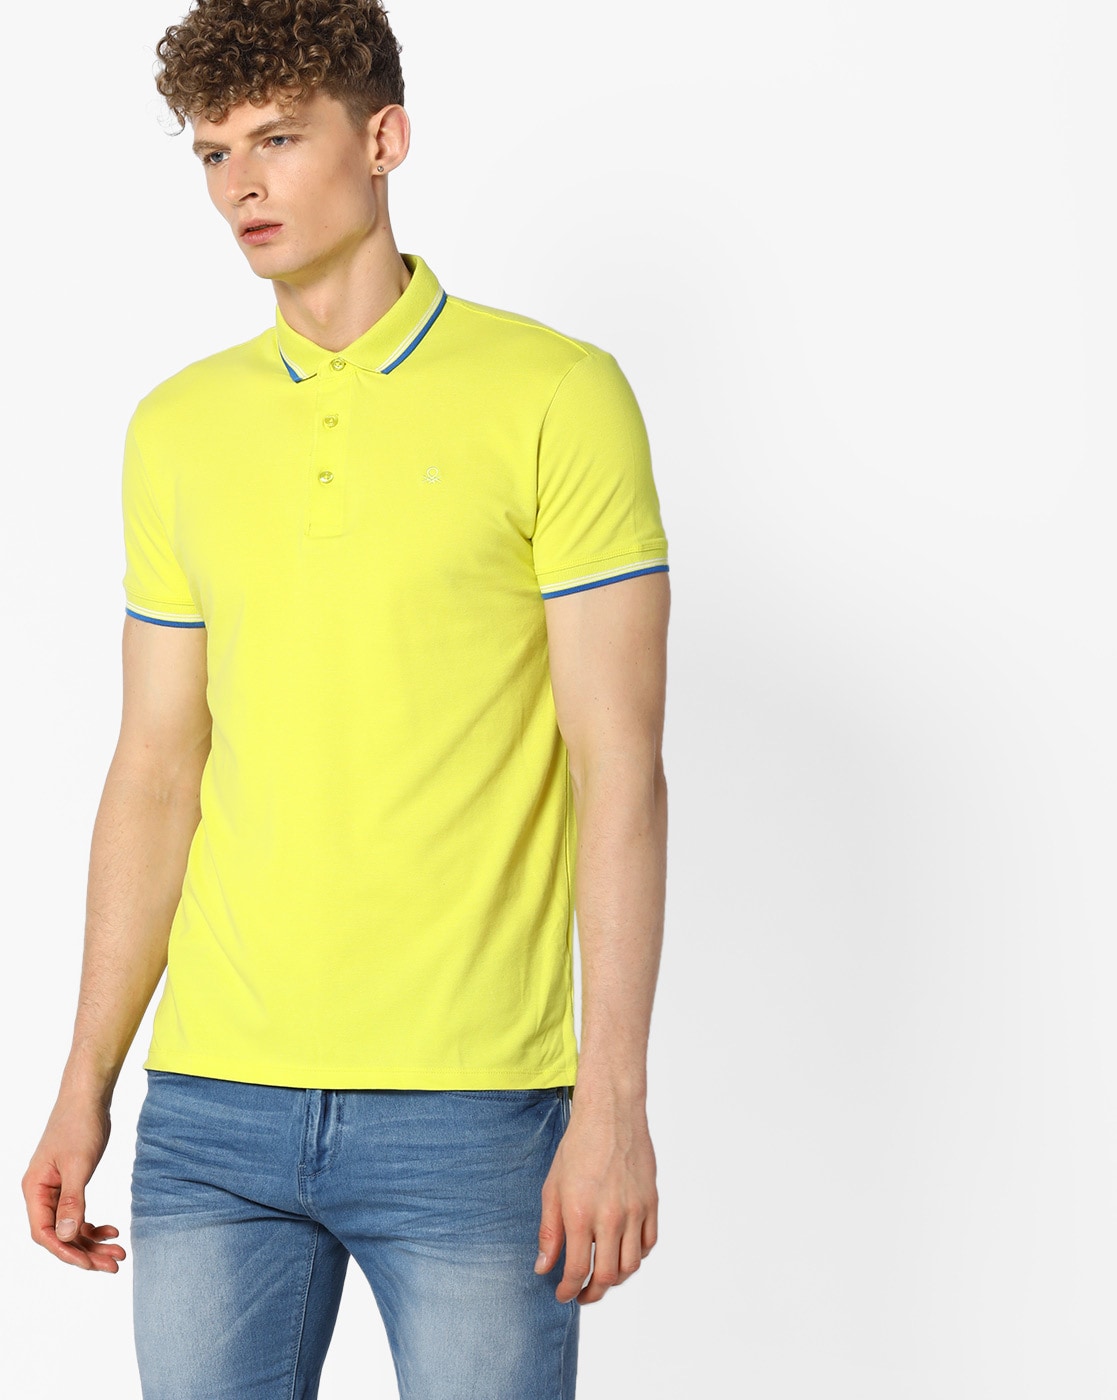 Lemon Yellow Colour T Shirt